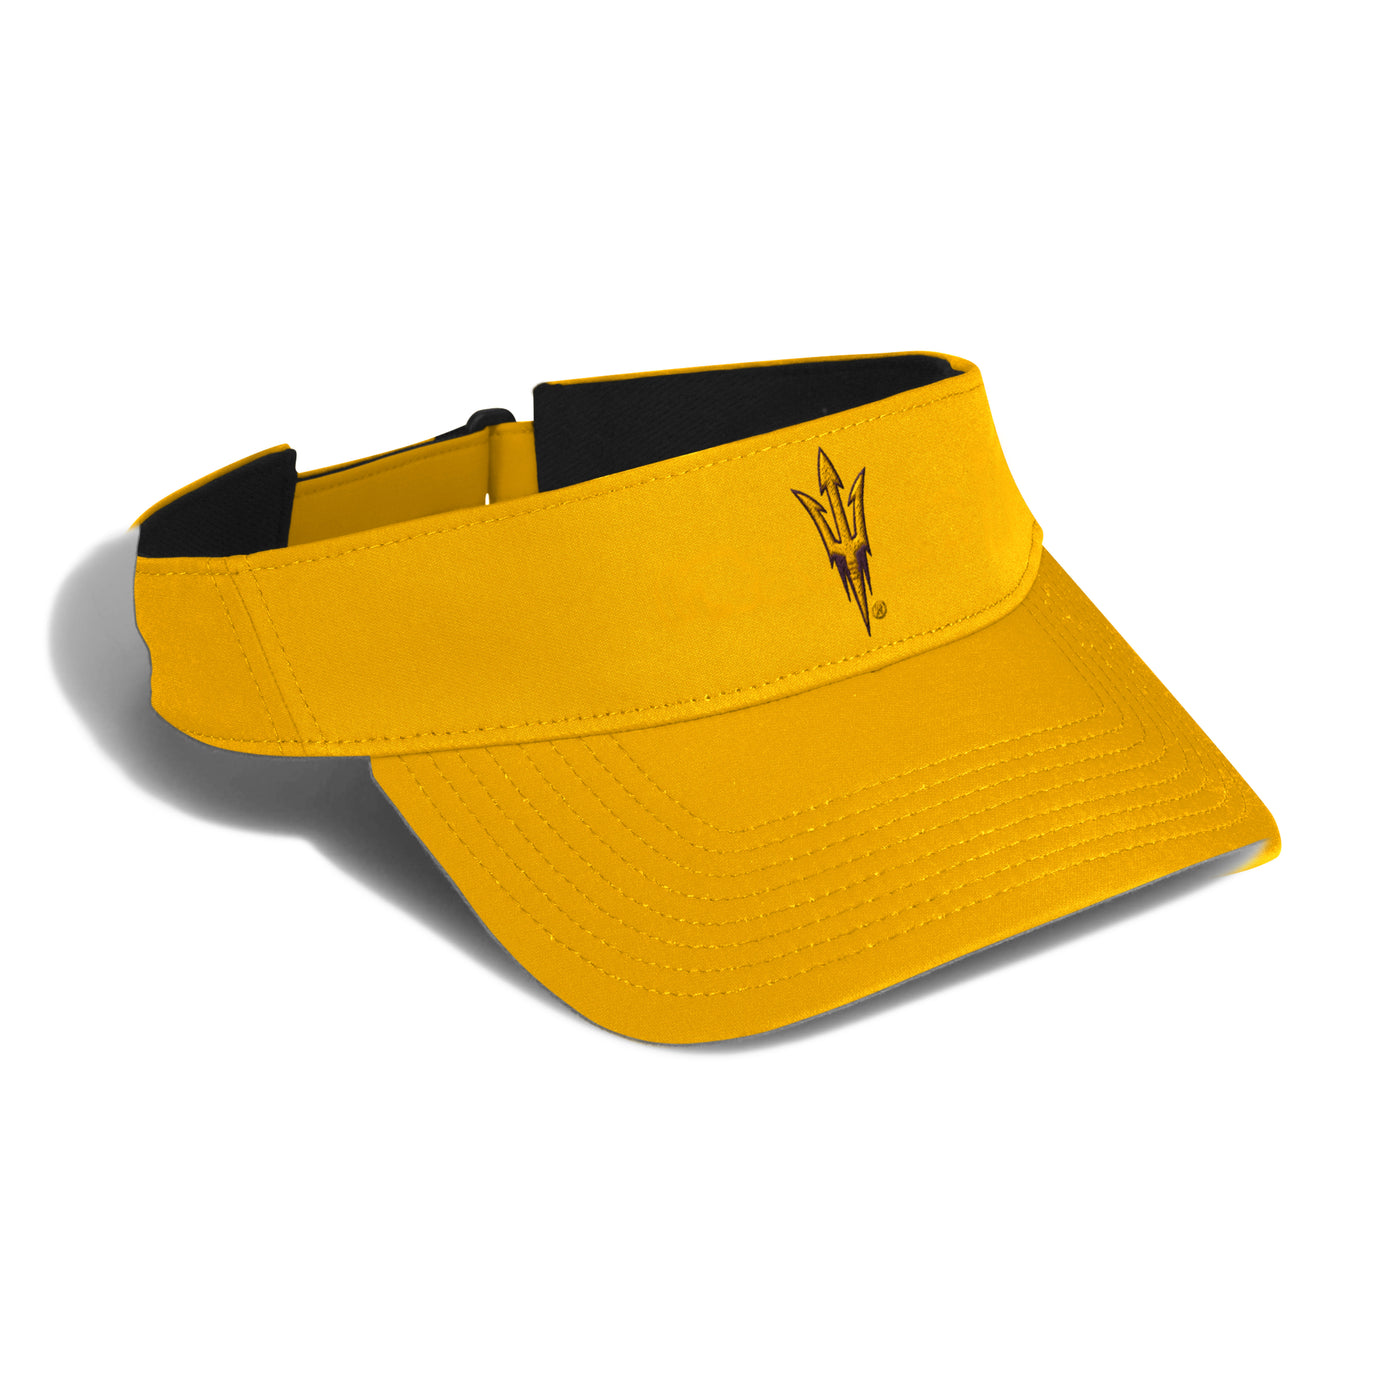 ASU gold visor with pitchfork on front